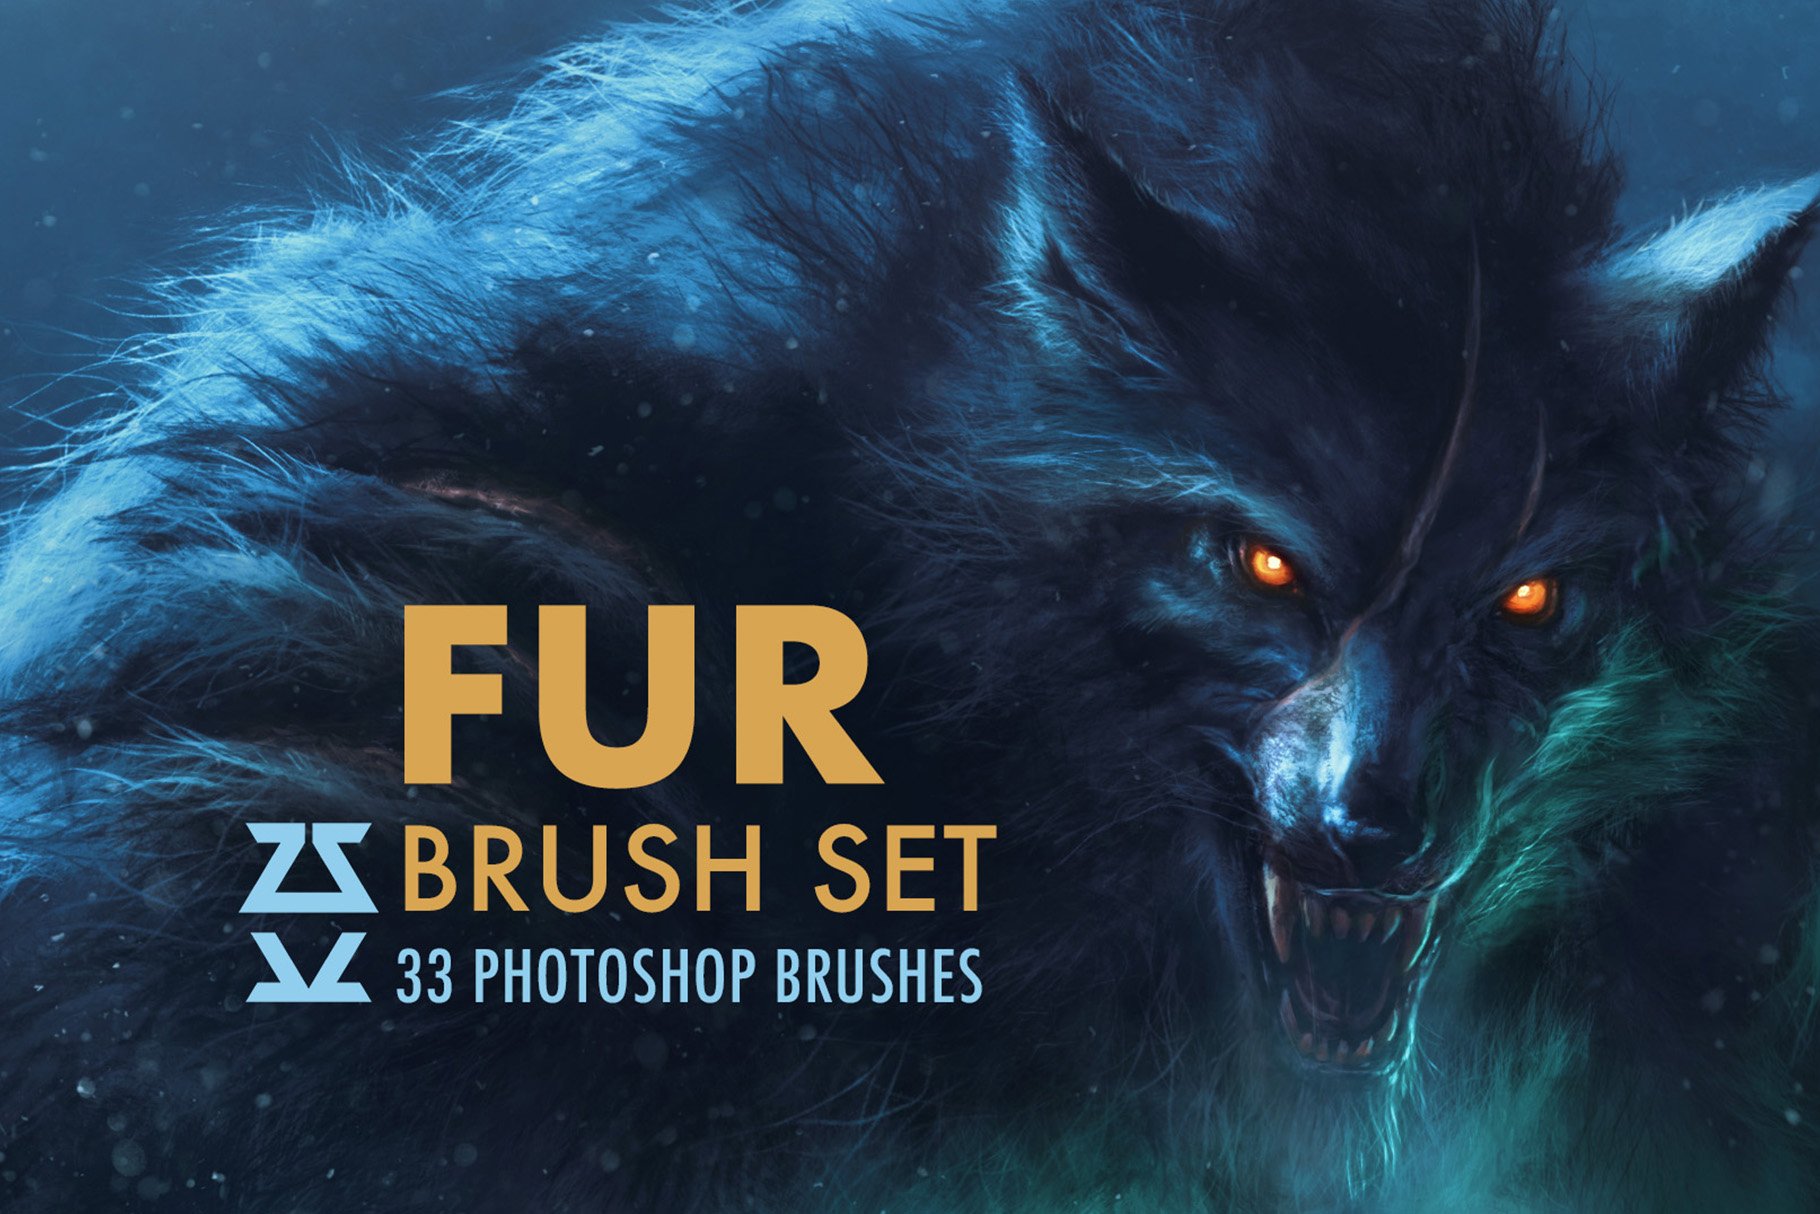 Fur Brush Setcover image.